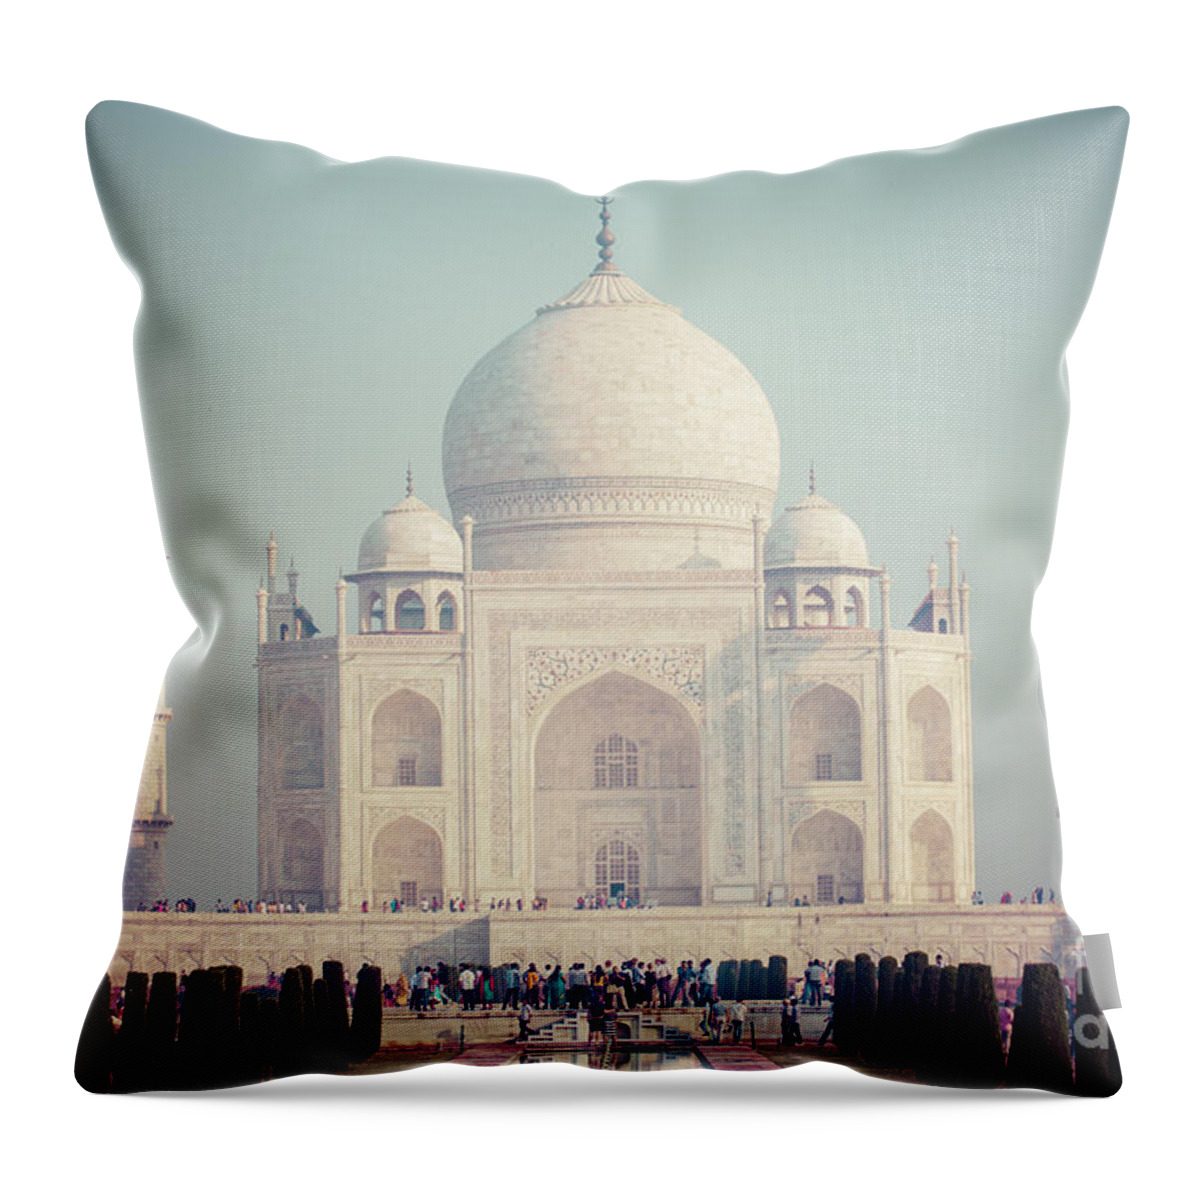  India Throw Pillow featuring the photograph Taj Mahal by Mariusz Prusaczyk